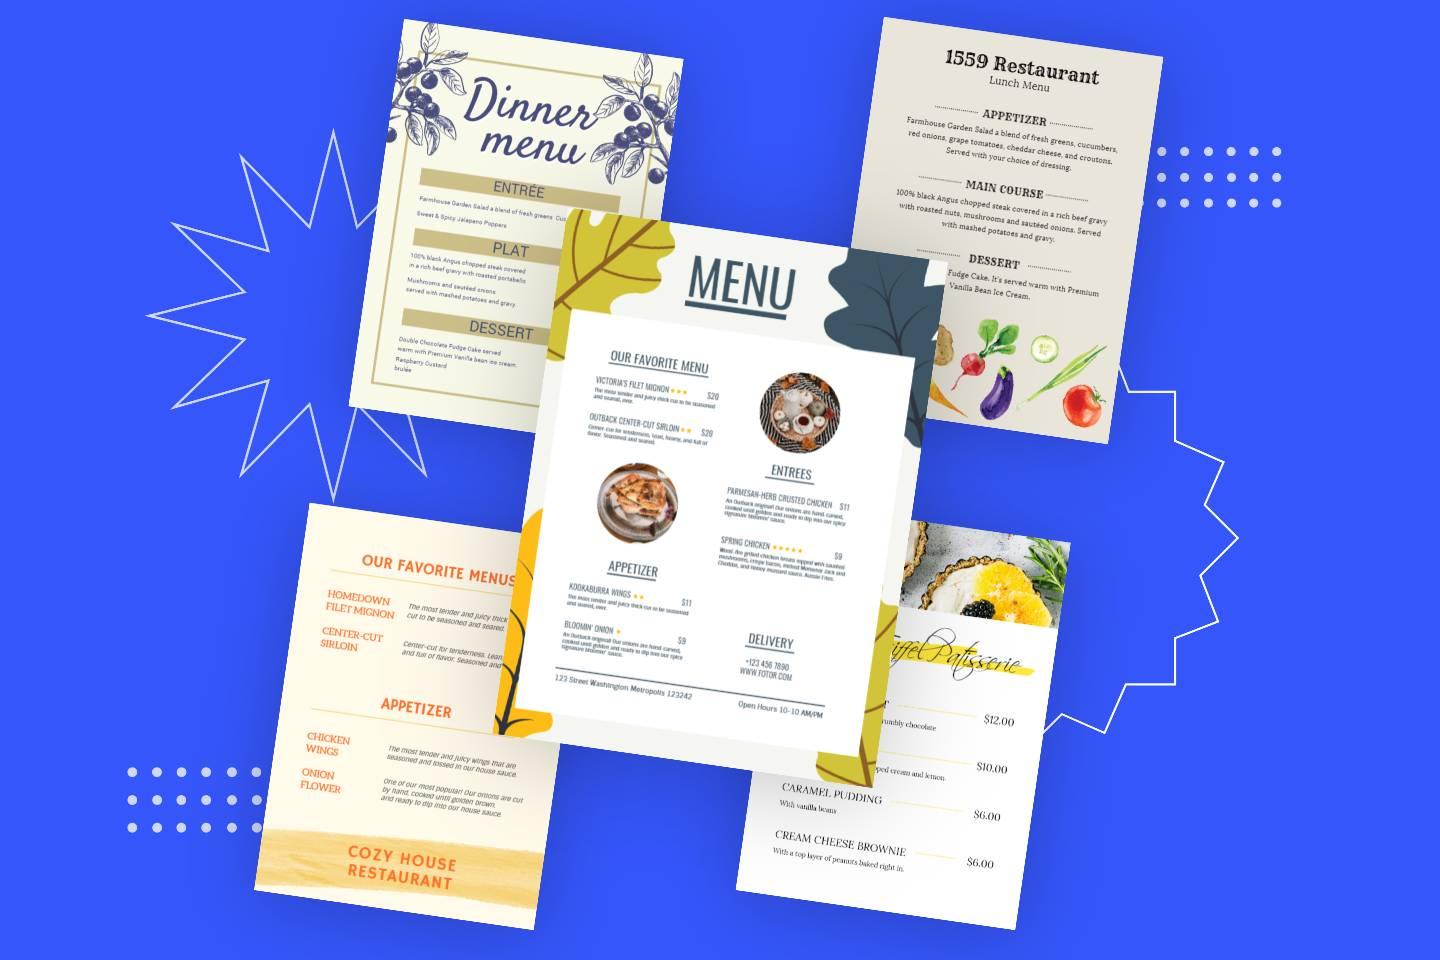 printable dinner menu template